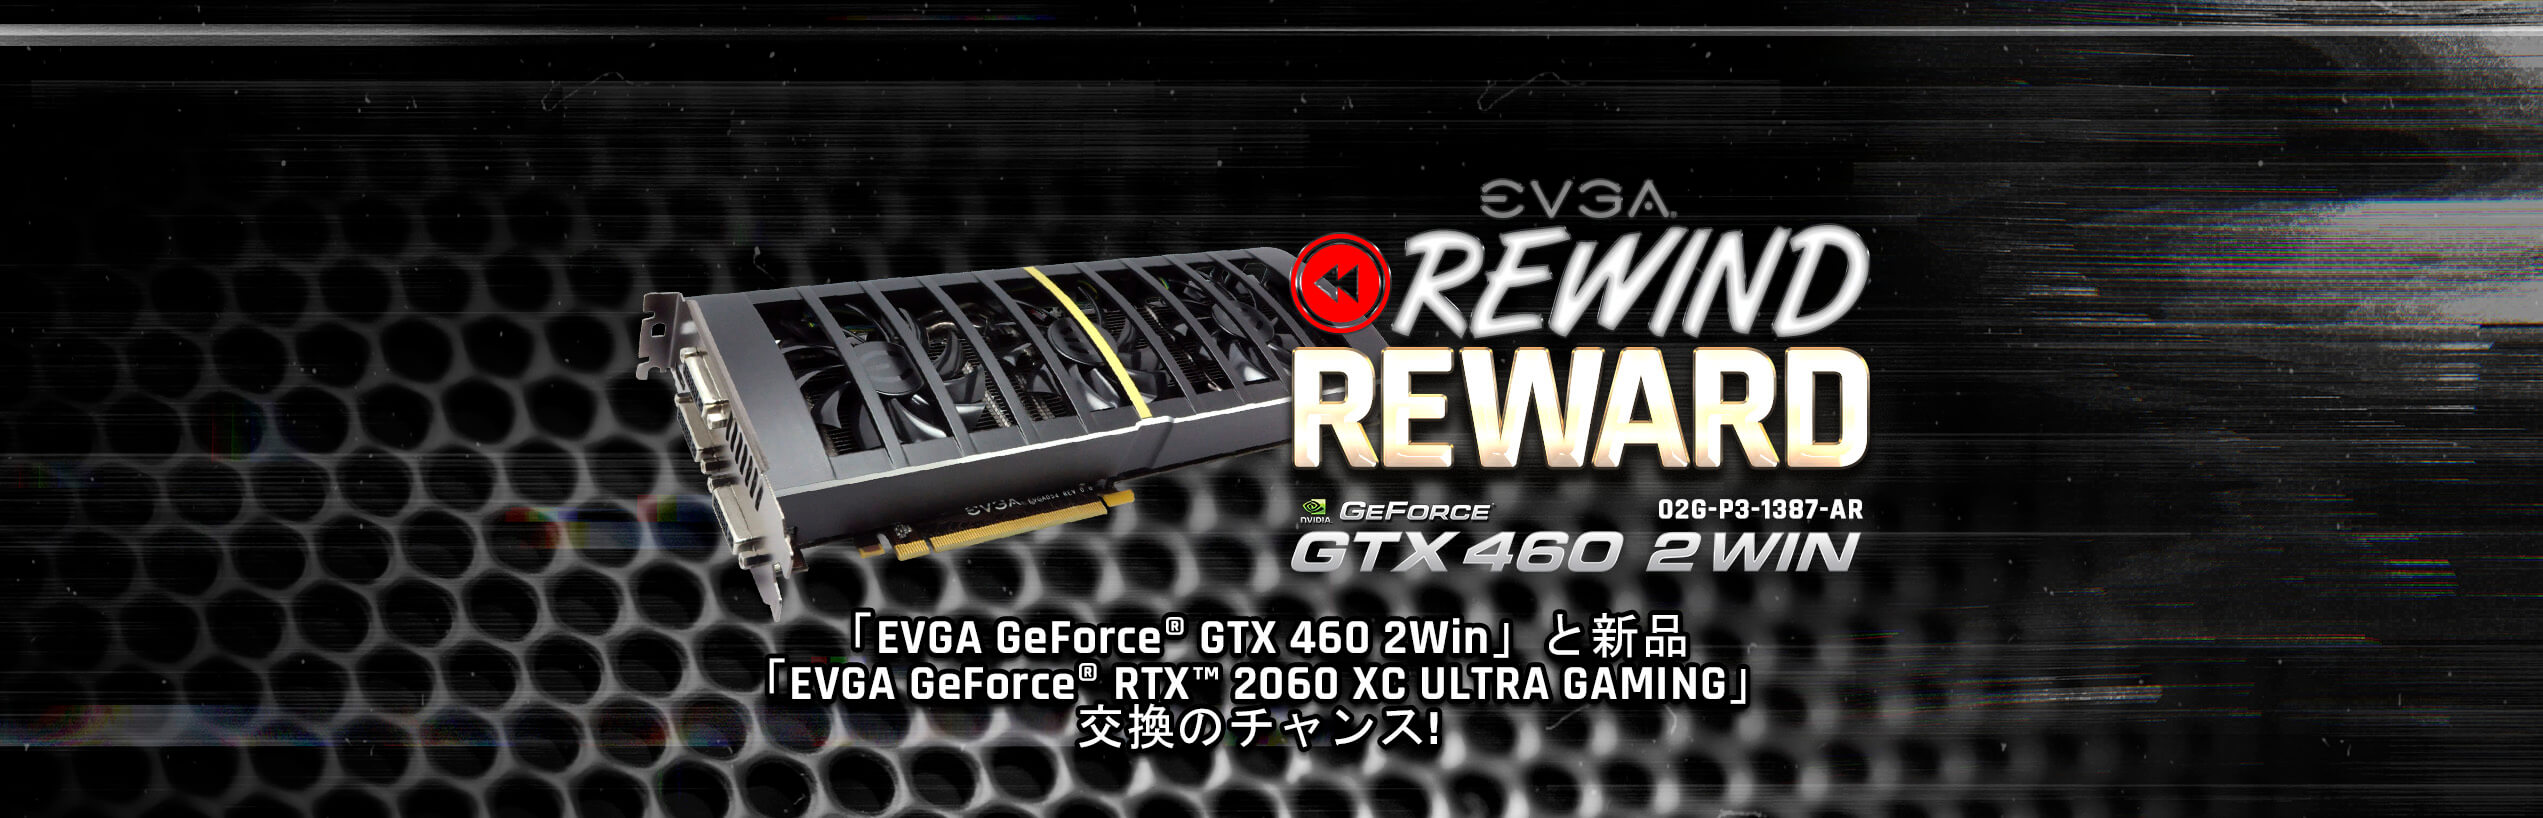 EVGA GeForce GTX 460 2Win から EVGA GeForce RTX 2060 XC ULTRA GAMING へ